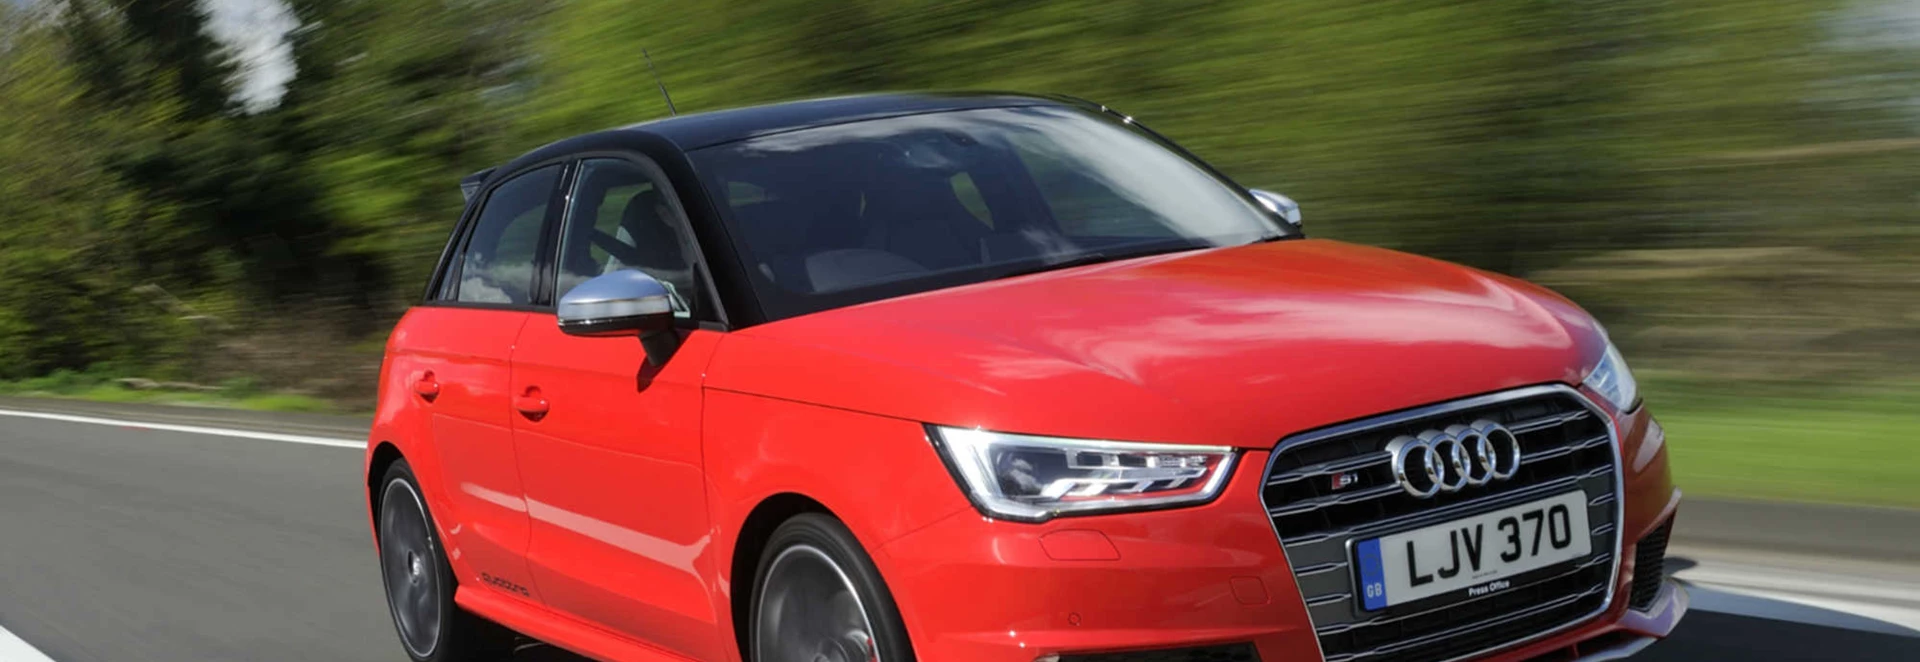 Audi S1 hatchback review 